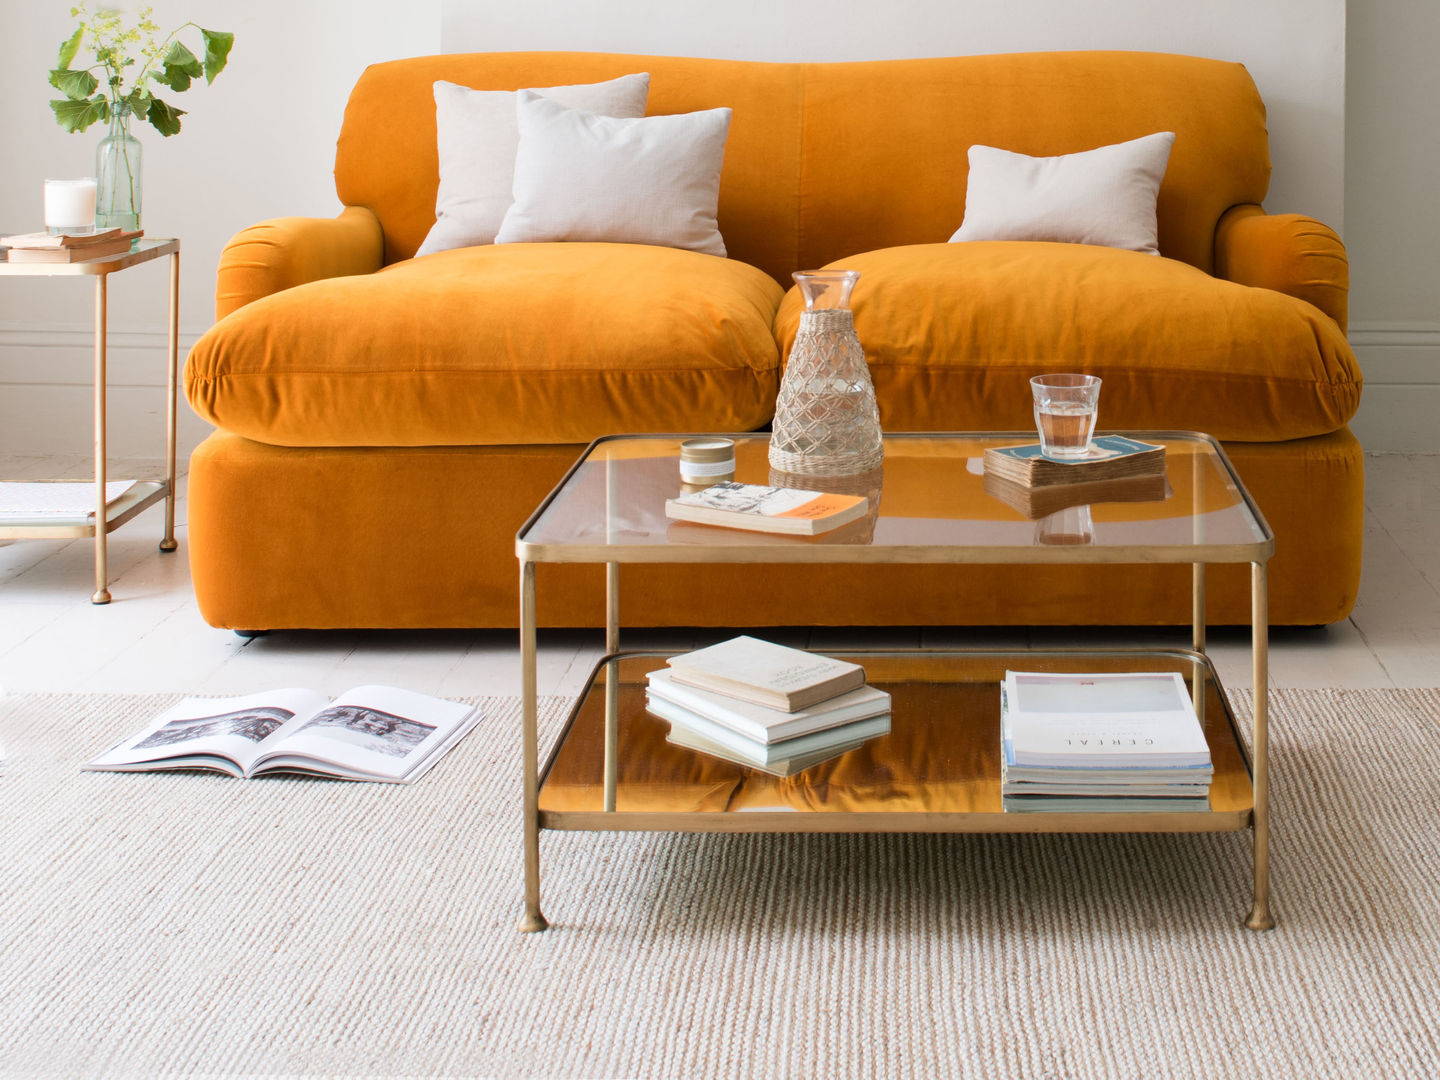 Wonder-Boy coffee table Loaf غرفة المعيشة brass,glass,coffee table,table,living room,orange sofa,sofa